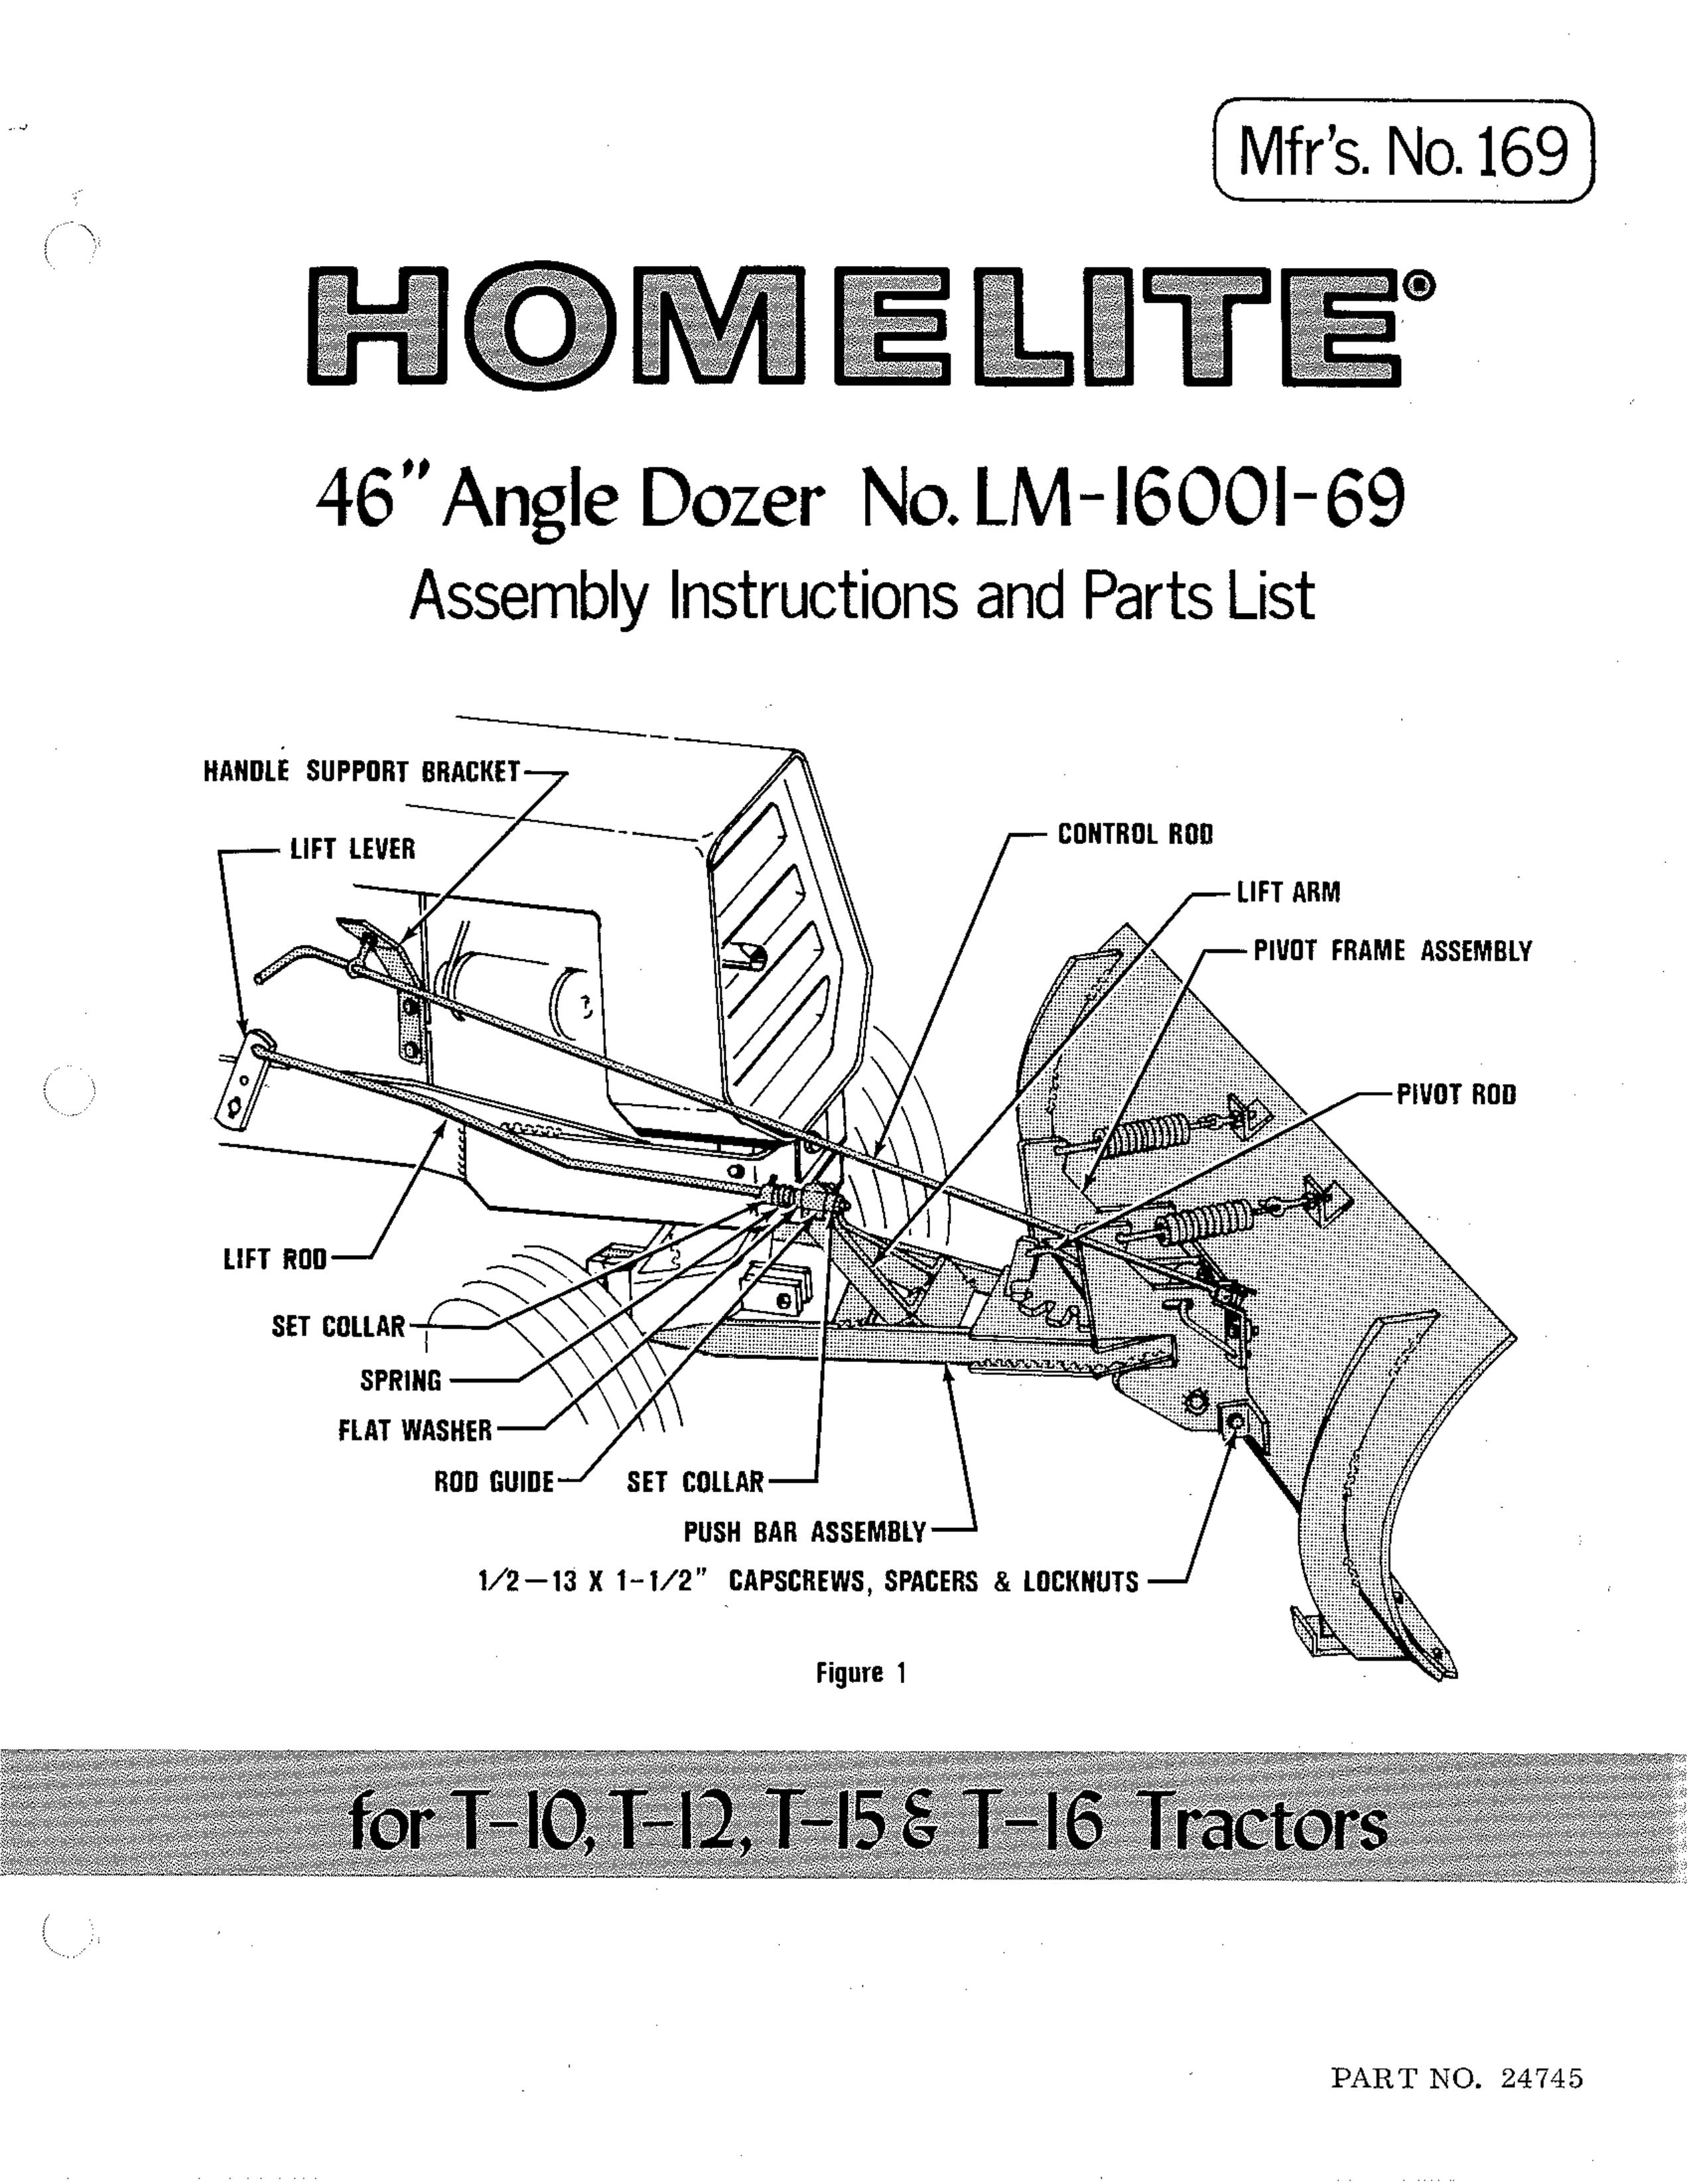 Homelite LM-16001-69 Lawn Mower User Manual